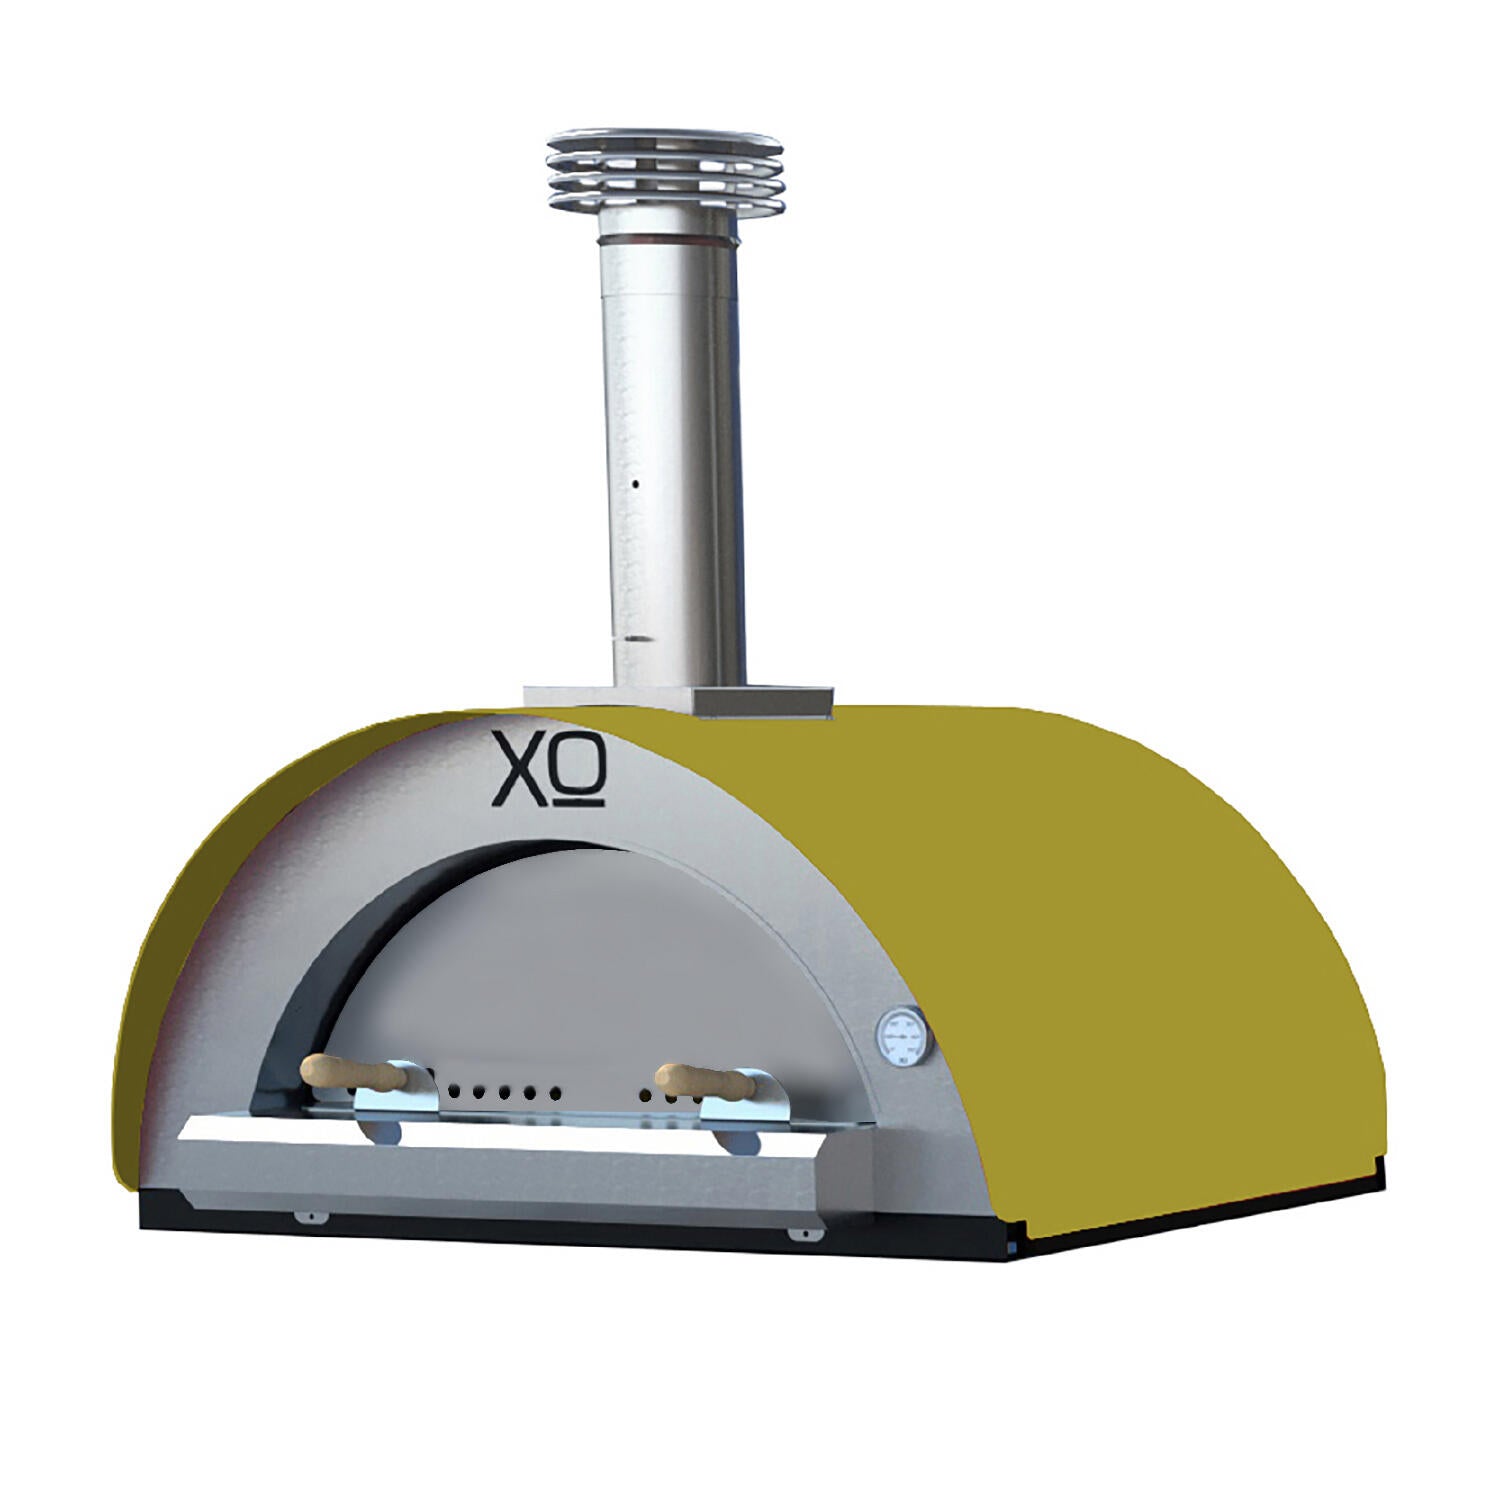 Xo Appliance XOPIZZA4GI 40In Wood Fired Pizza Oven Giallo (Yellow)